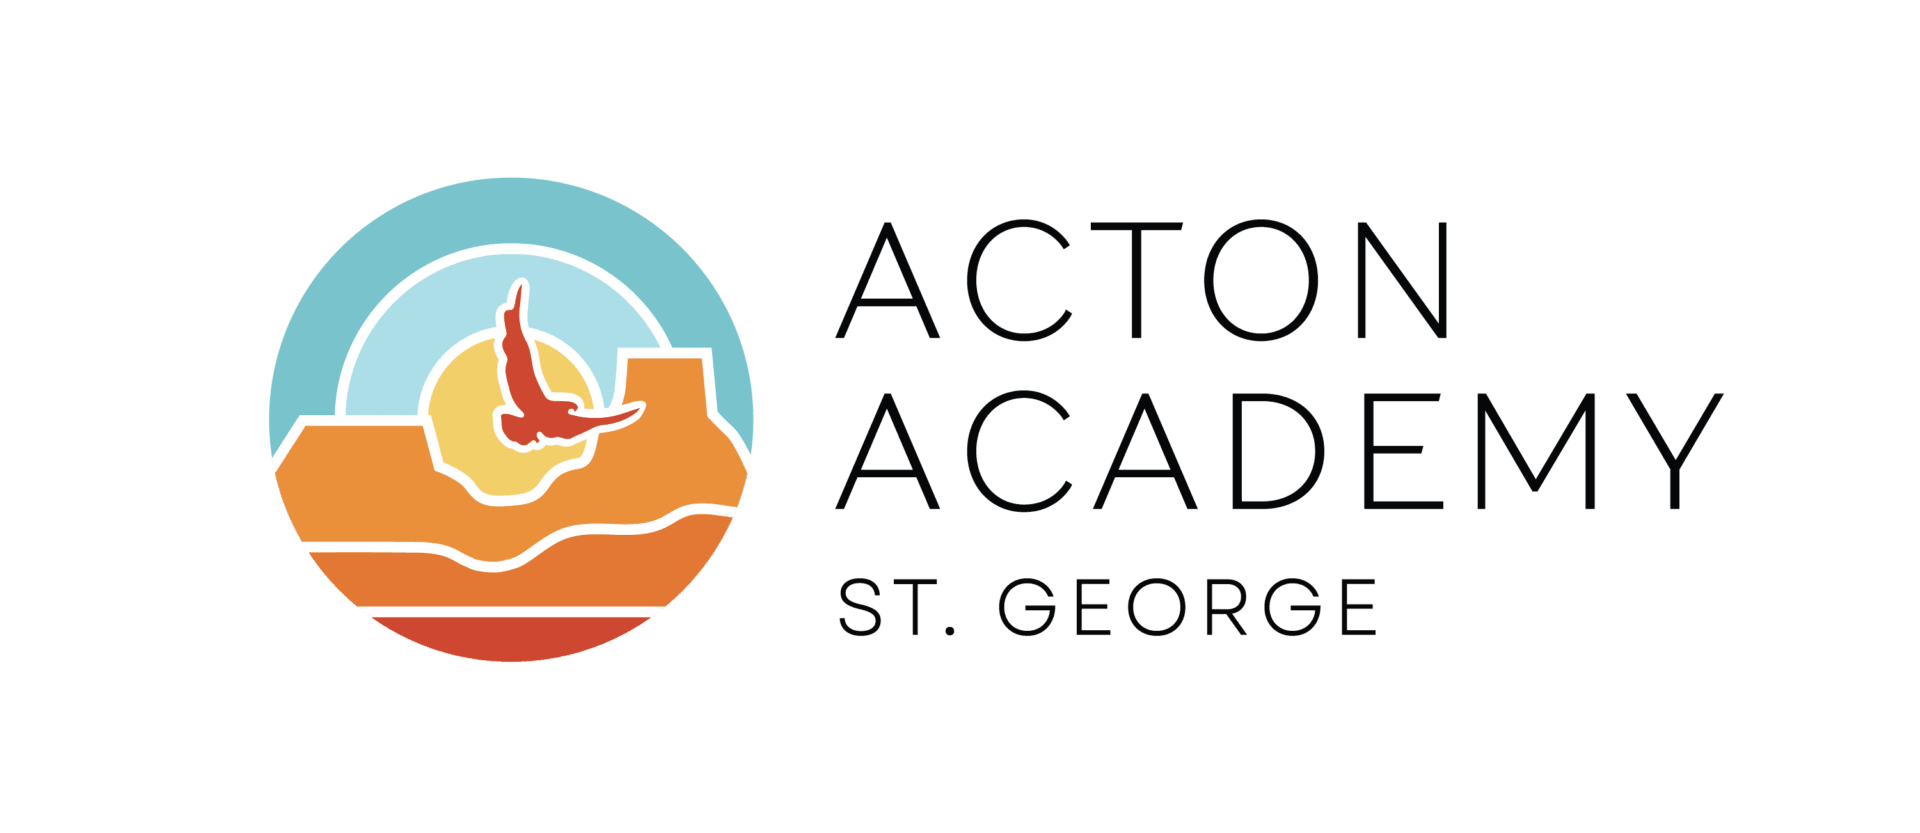 acton-academy-st-george-logo